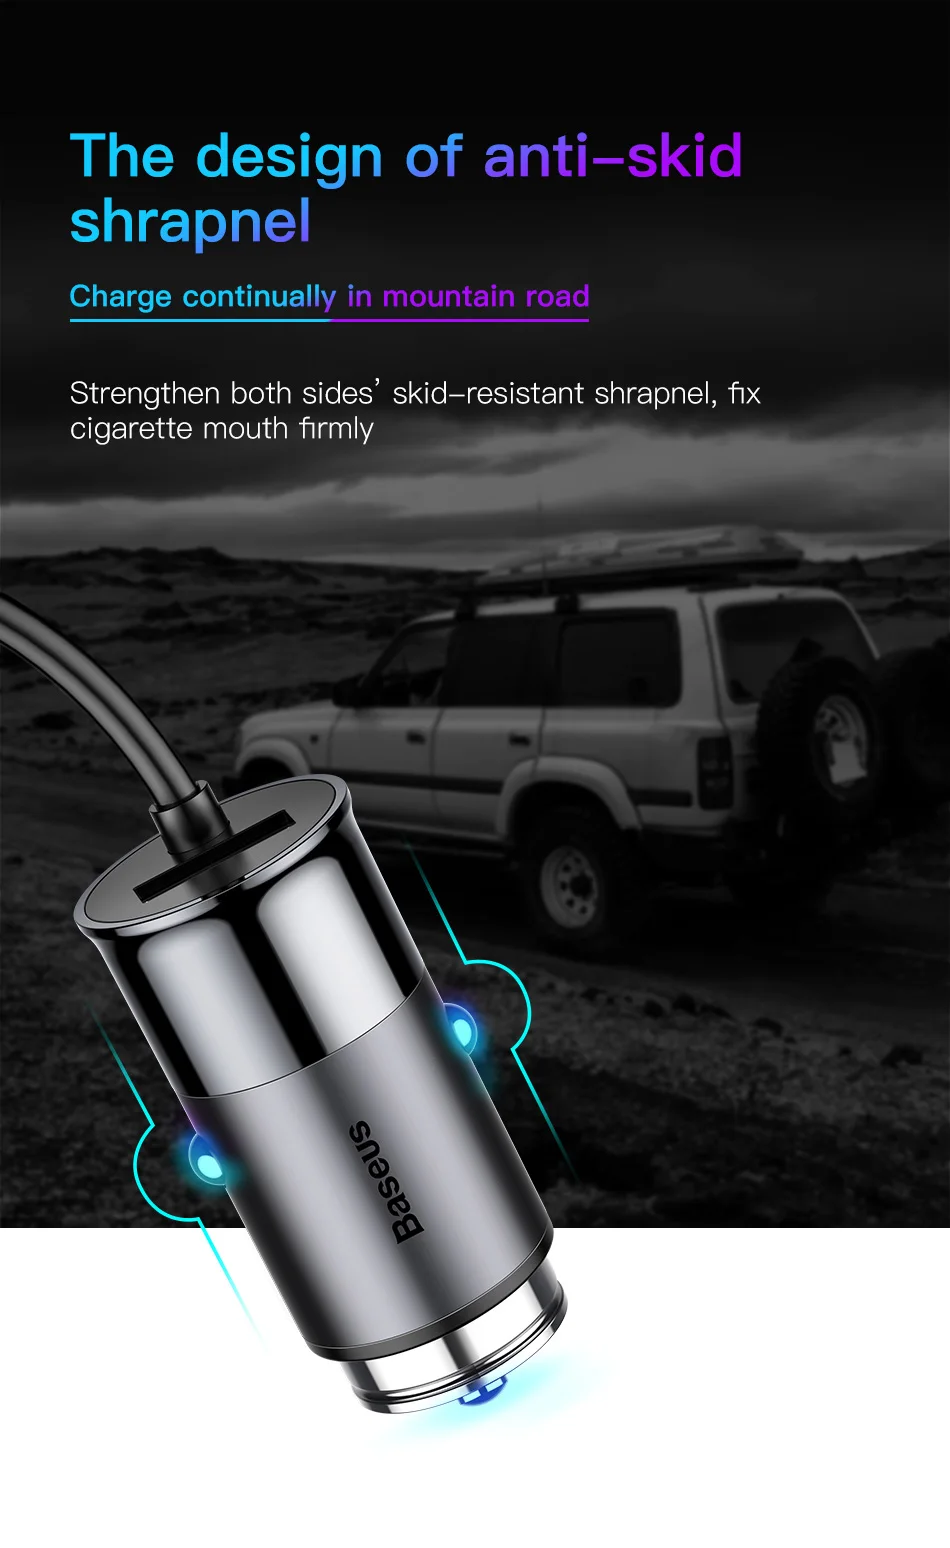 Baseus 4.8A автомобильное зарядное устройство кабель USB разъем адаптер для Iphone Xs Max samsung Plus 10 Тип C телефон зарядка авто зарядное устройство аксессуар